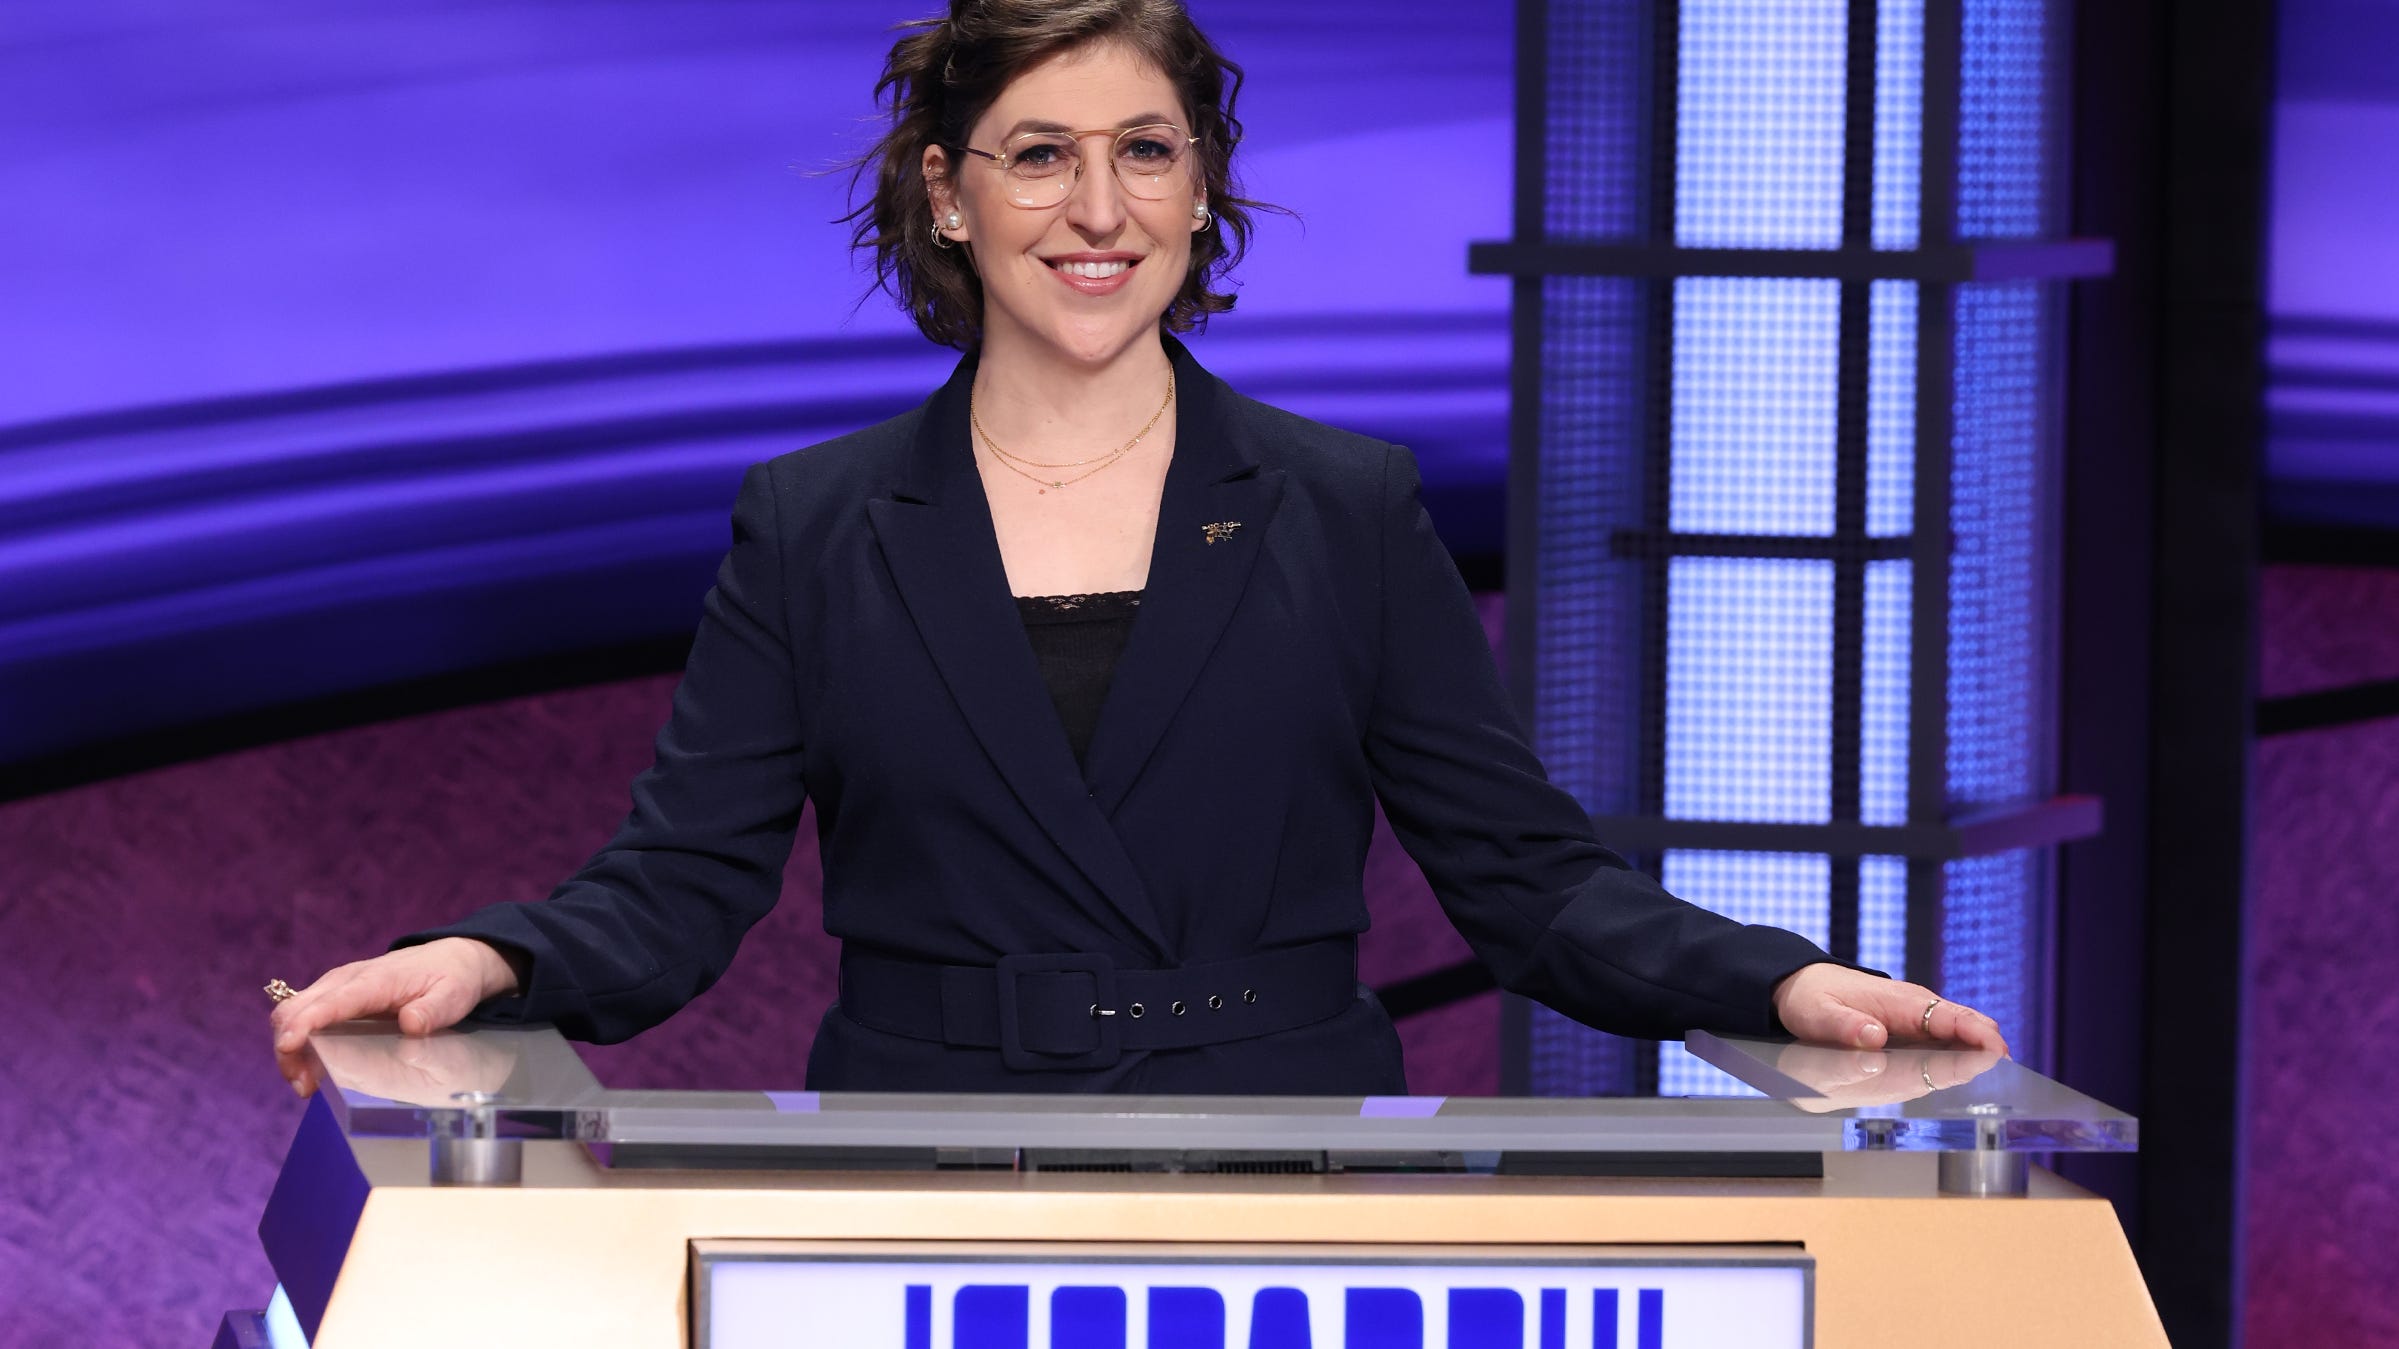 Mayim Bialik's two-week turn as "Jeopardy!" host kicks off Monday, May 31.